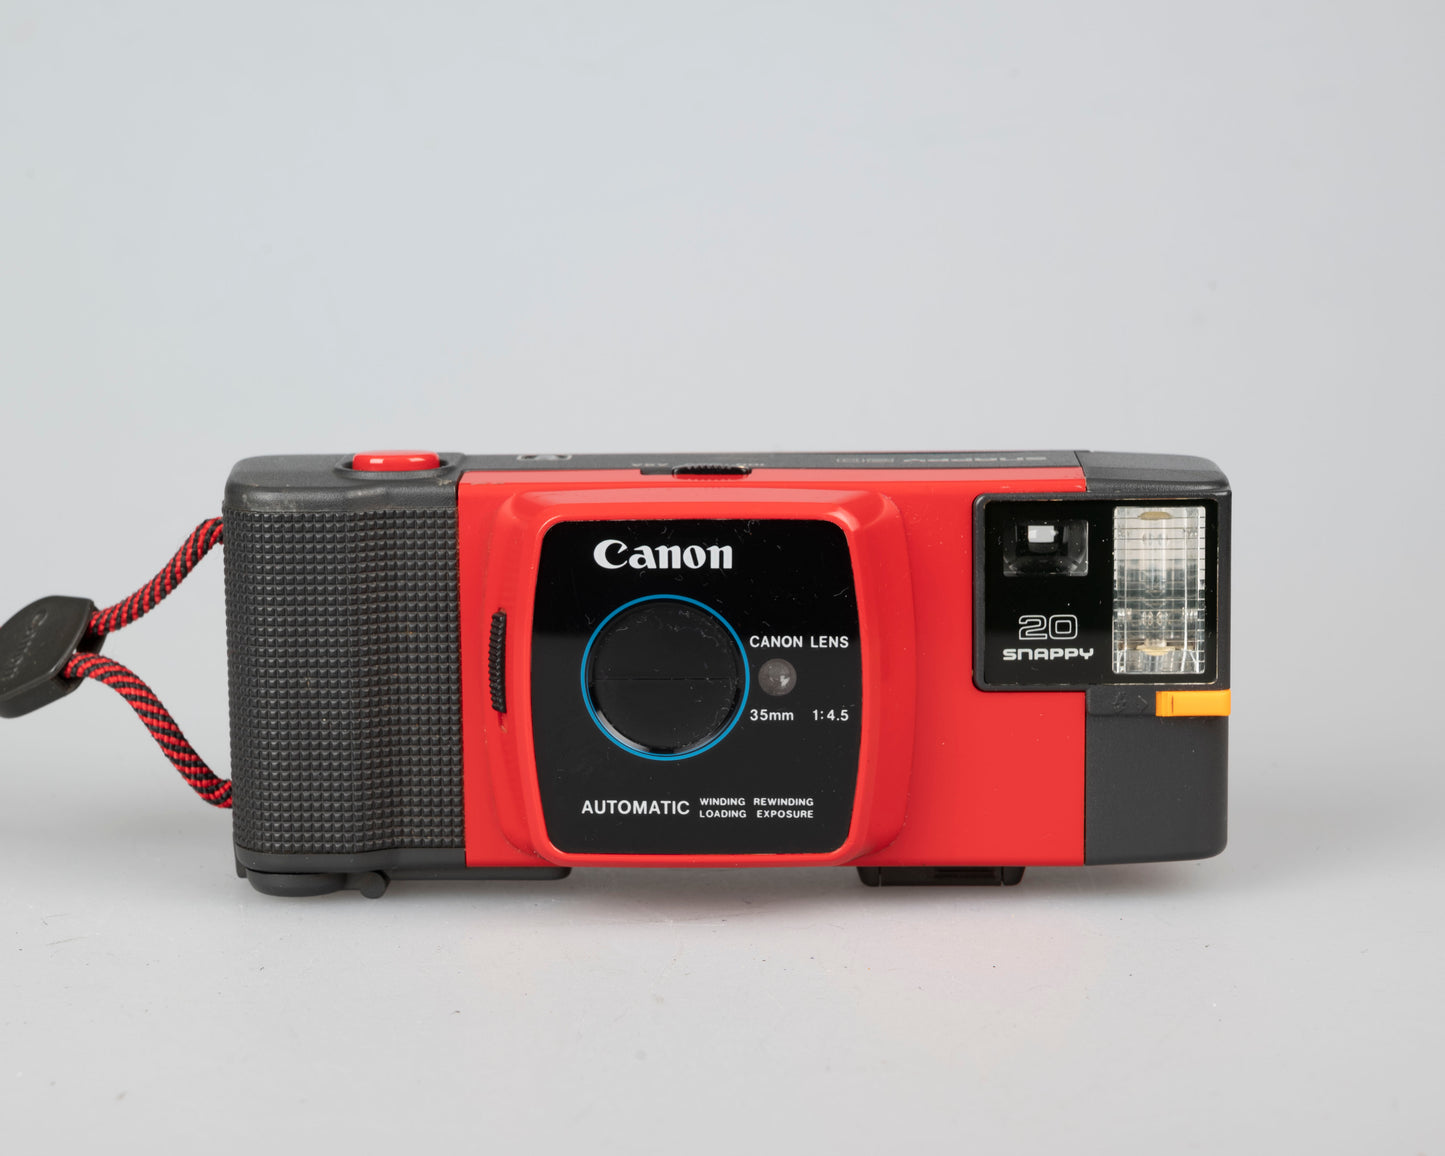 Canon Snappy 20 35mm camera (serial 1198562)